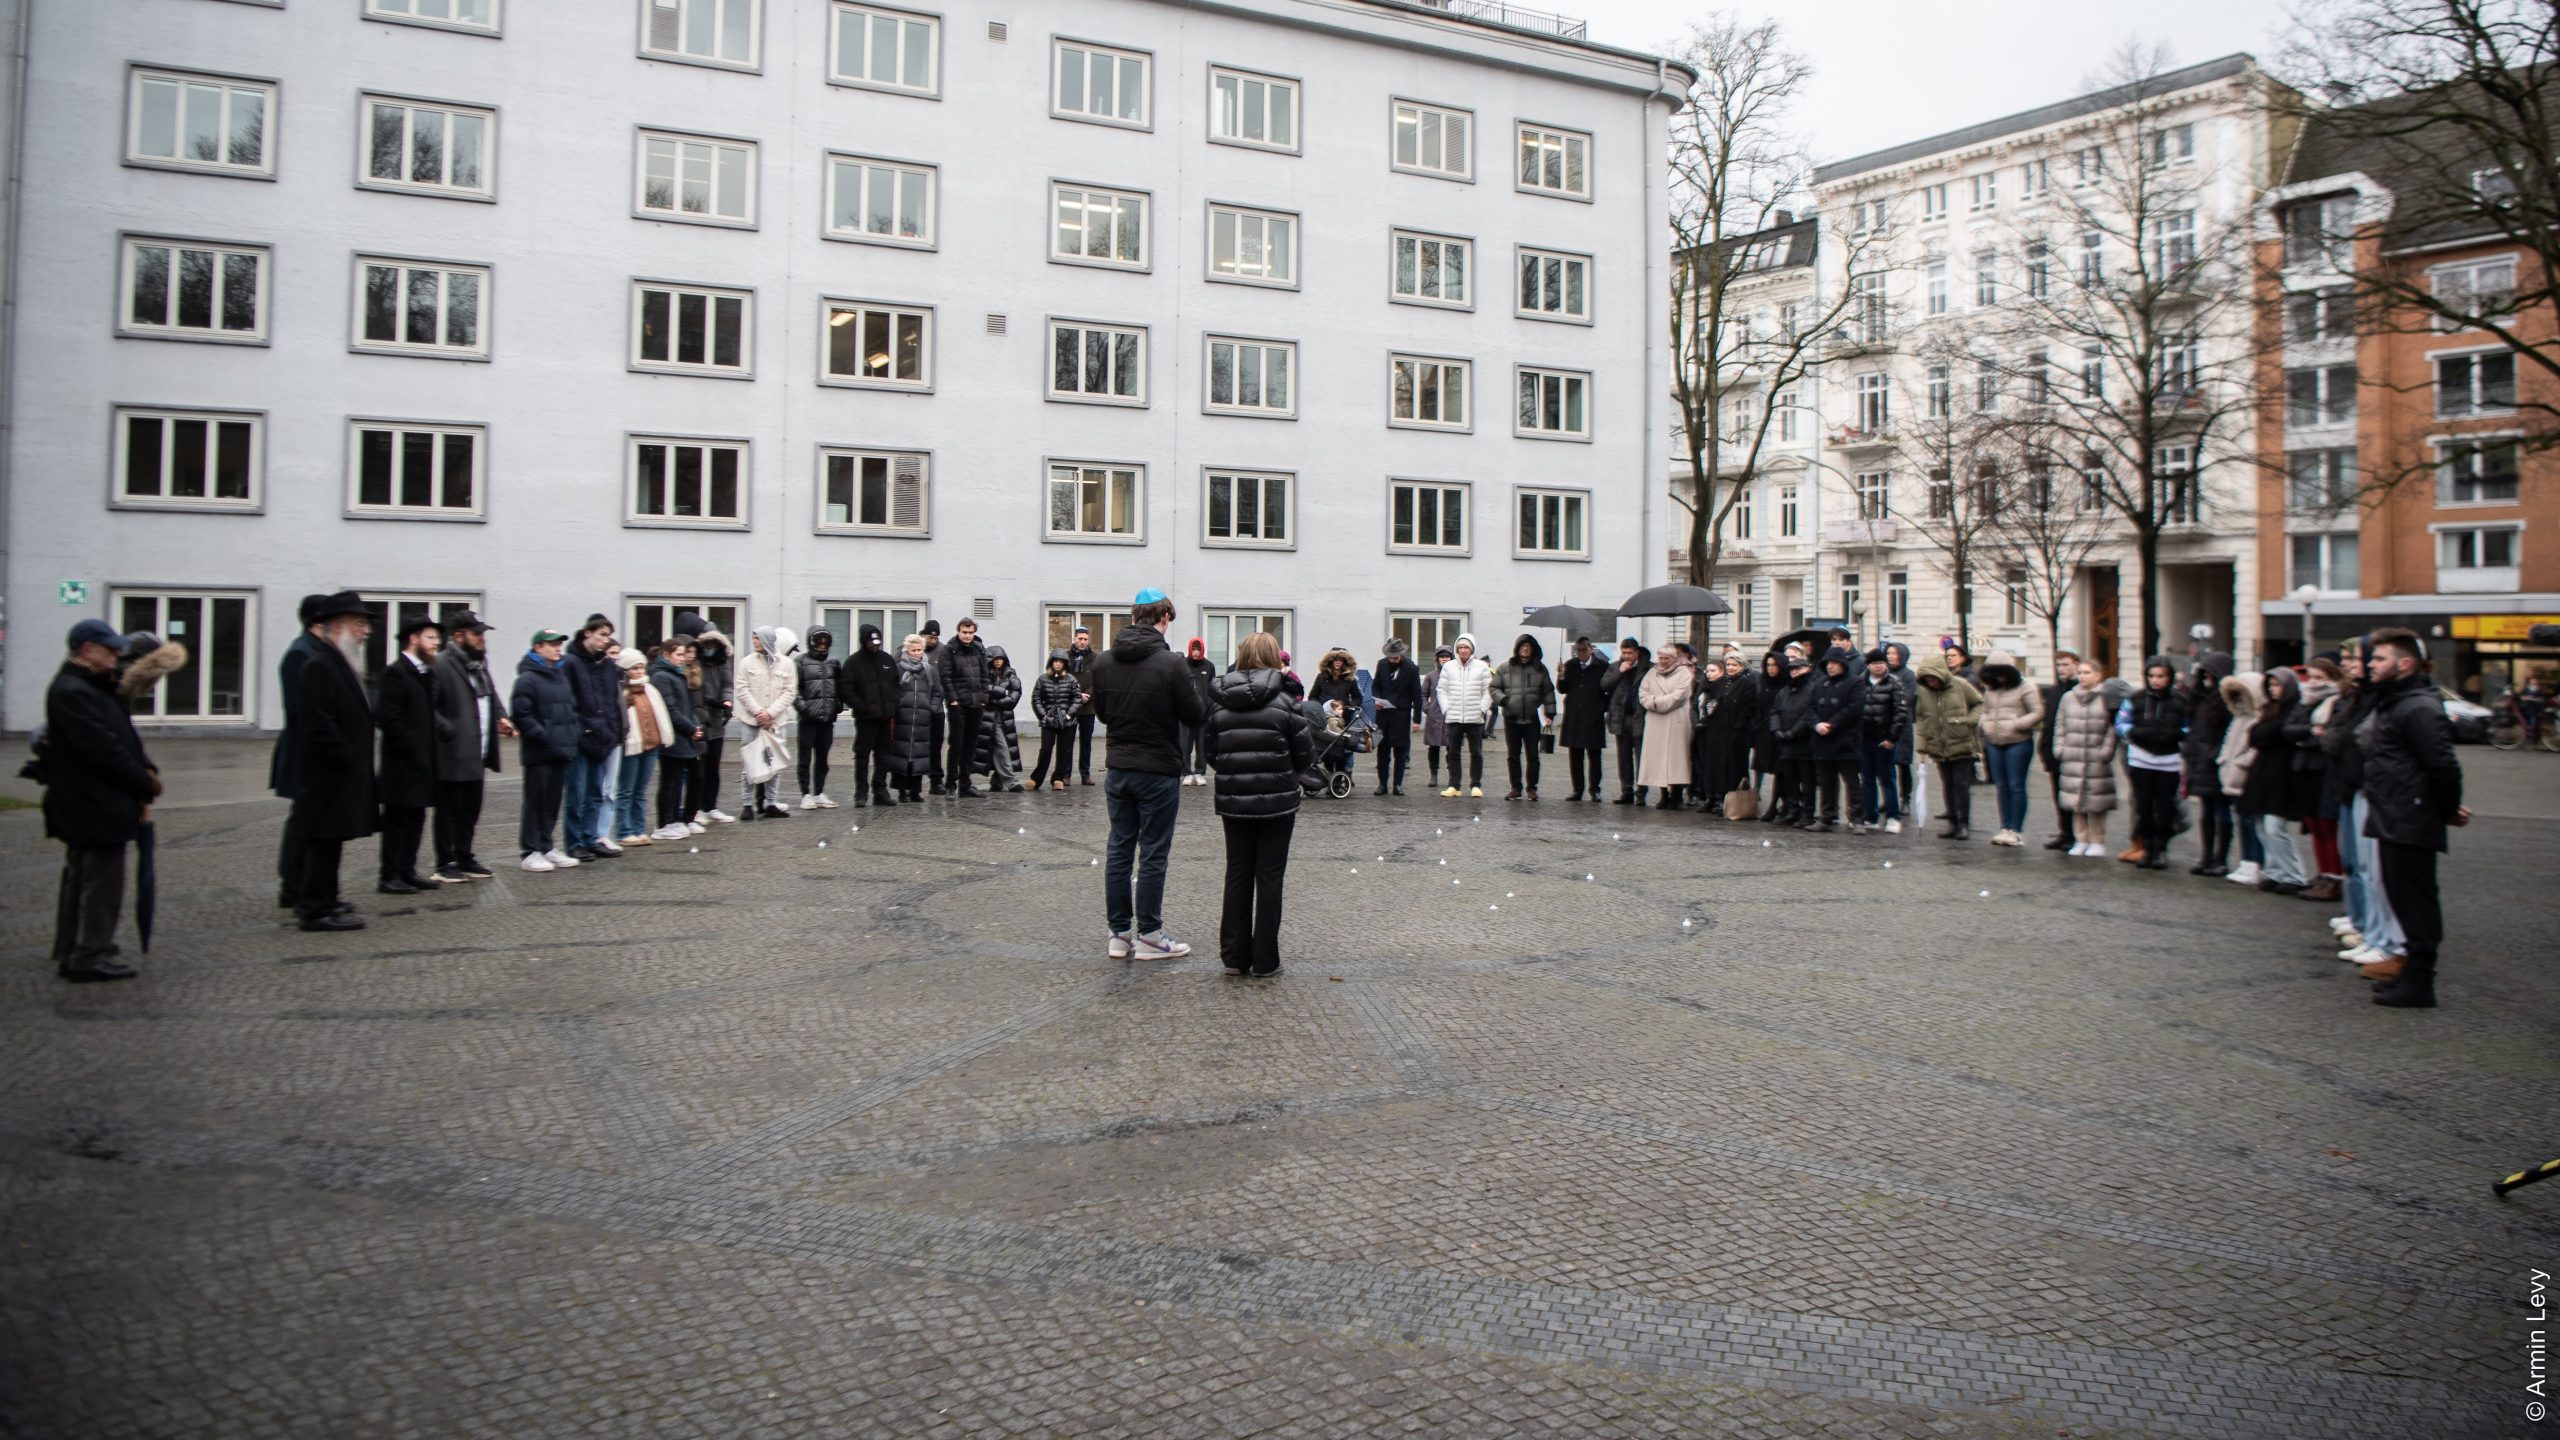 Staatsministerin Claudia Roth gedenkt dem Holocaust auf dem Bornplatz | Foto: © Armin Levy